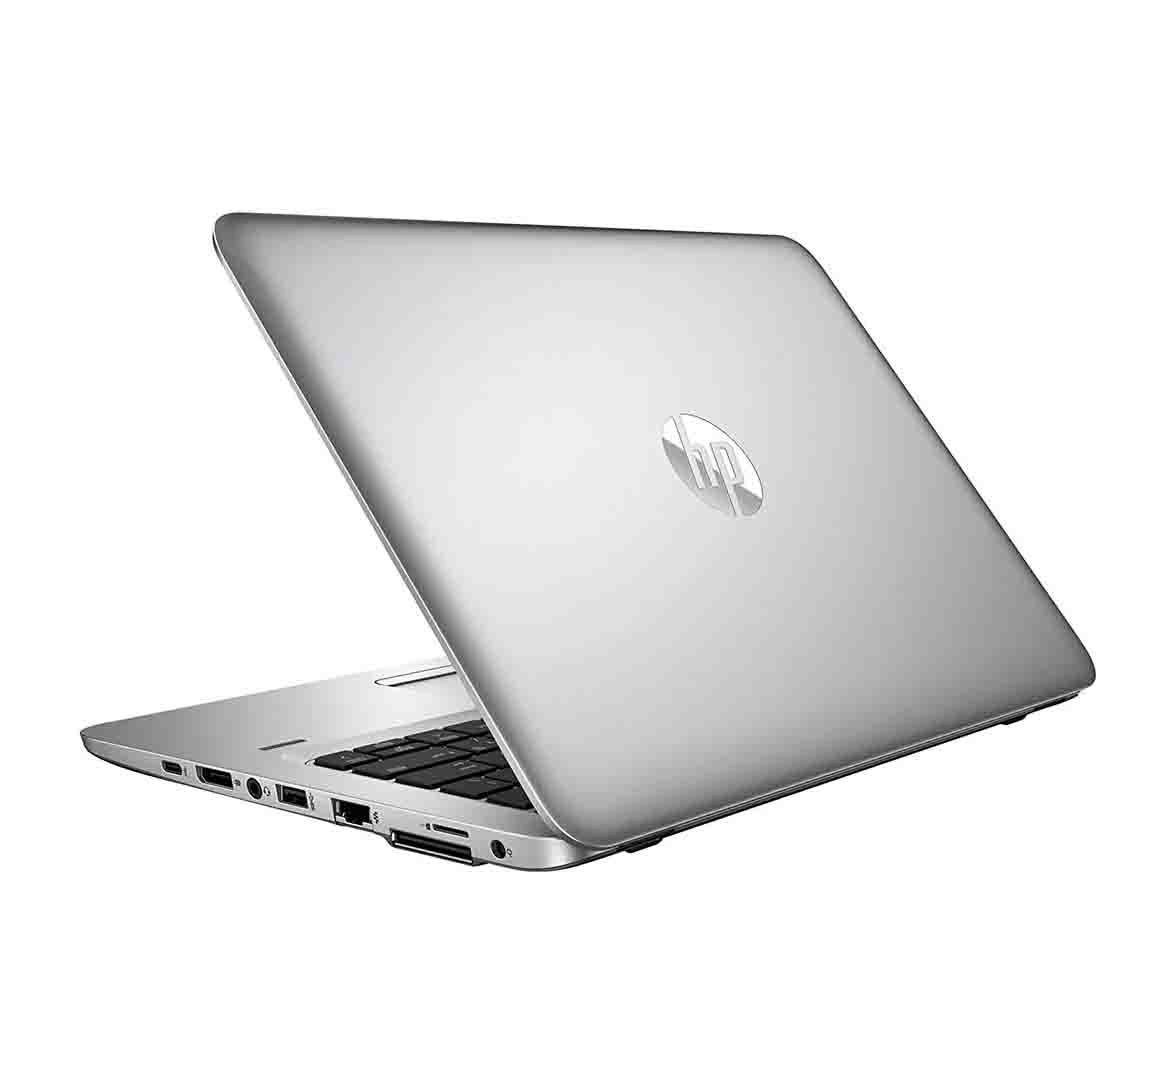 HP EliteBook 820 G3 Business Laptop, Intel Core i5-6th Generation CPU, 8GB RAM, 500GB HDD, 12.5 inch Display, Windows 10 Pro